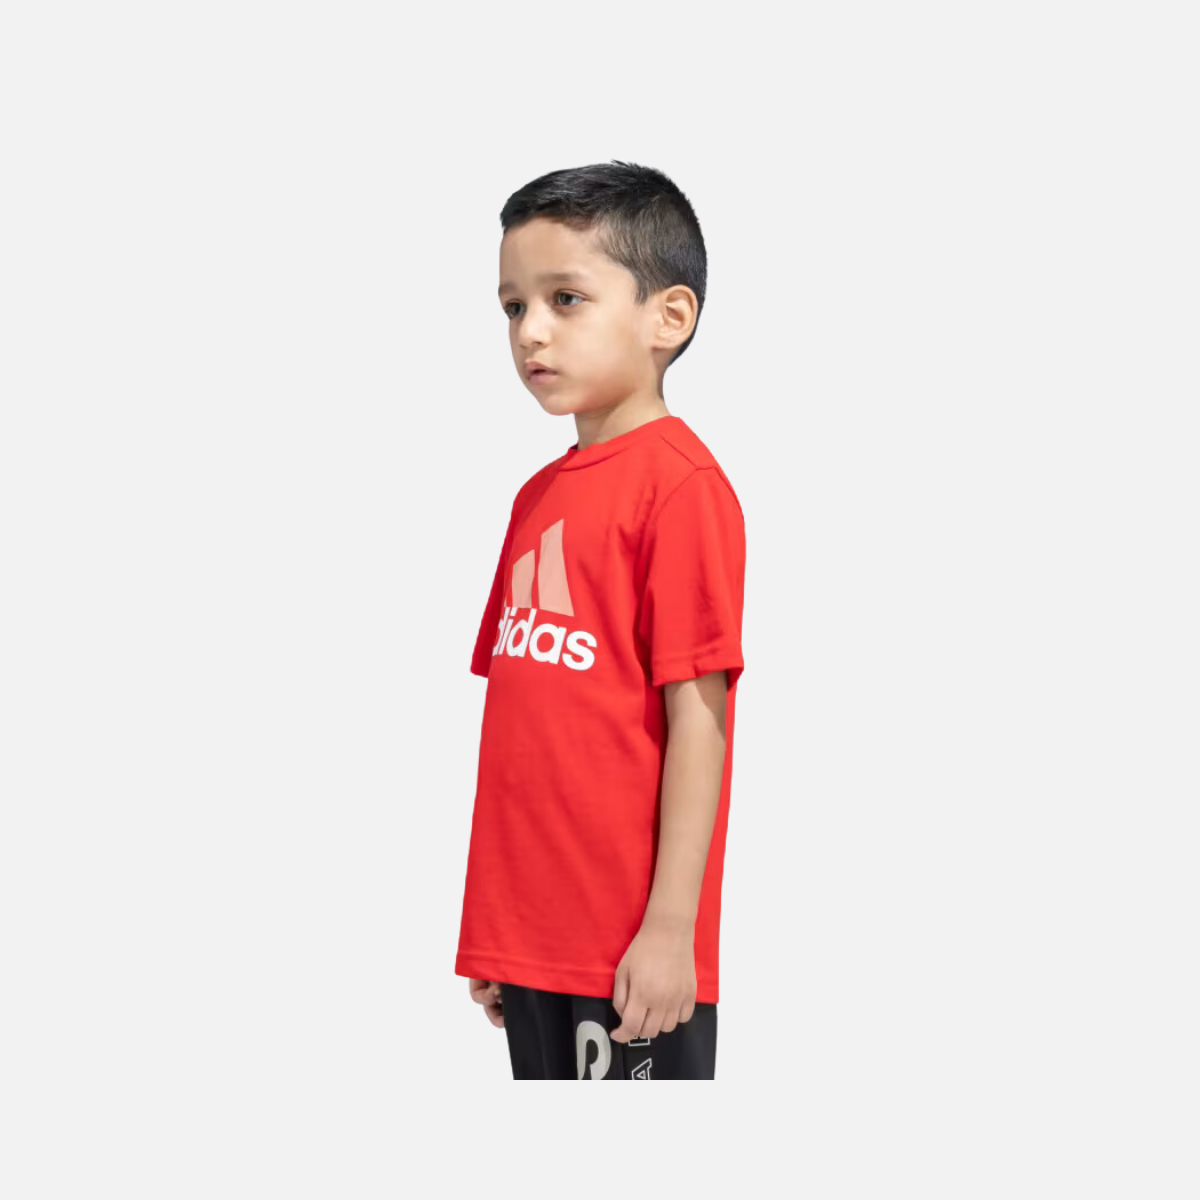 Adidas Kids Boy T-shirt (7-16 Years) - Better Scarlet